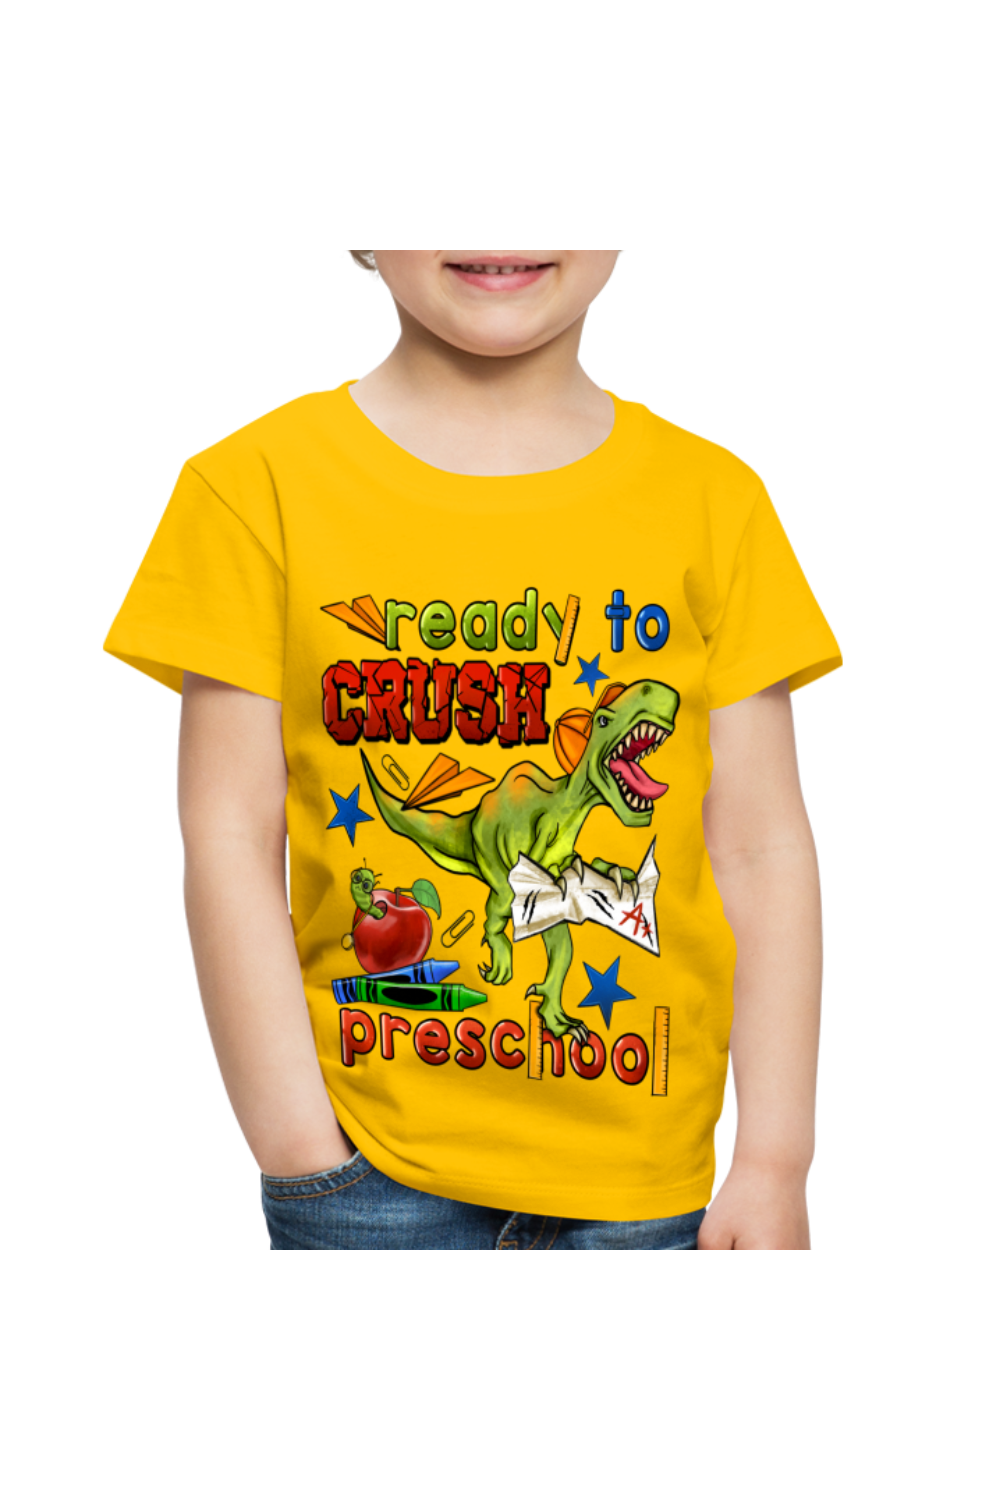 Toddler Boys Ready To Crush Preschool Short Sleeve Tee Shirt for Back To School - sun yellow